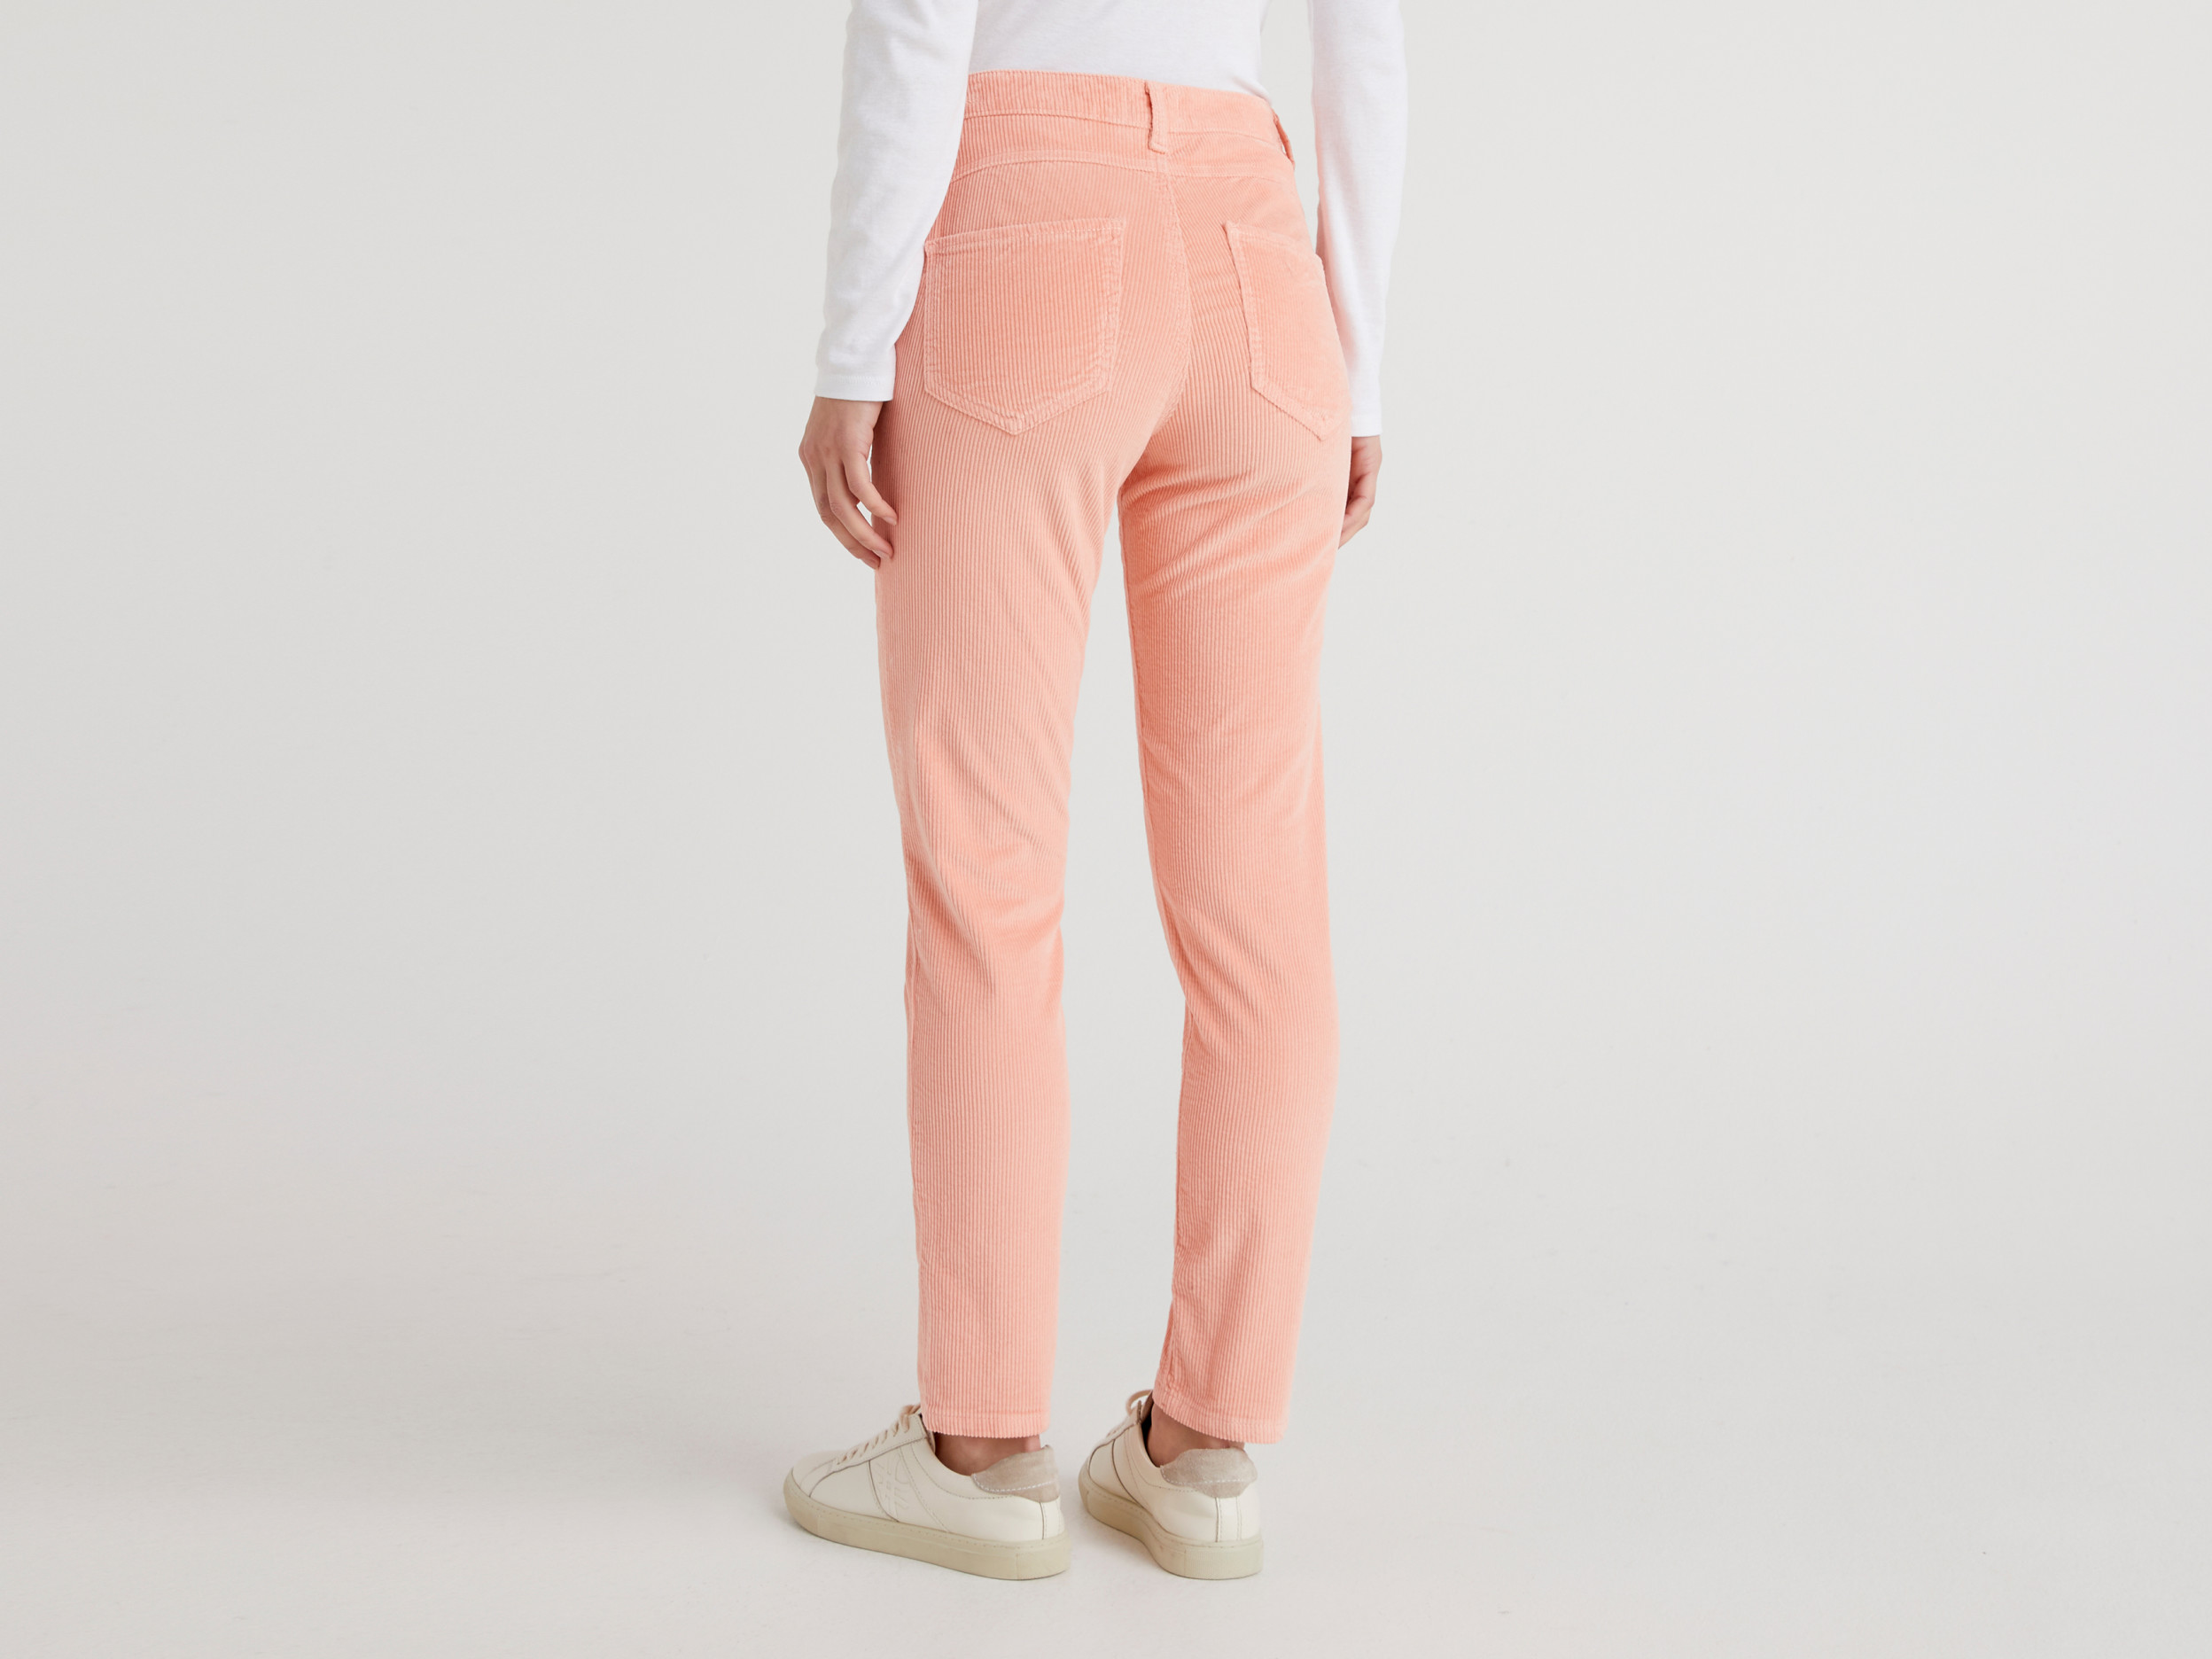 Benetton, Thinly-Striped Velvet Trousers, Taglia 6, Pink, Women